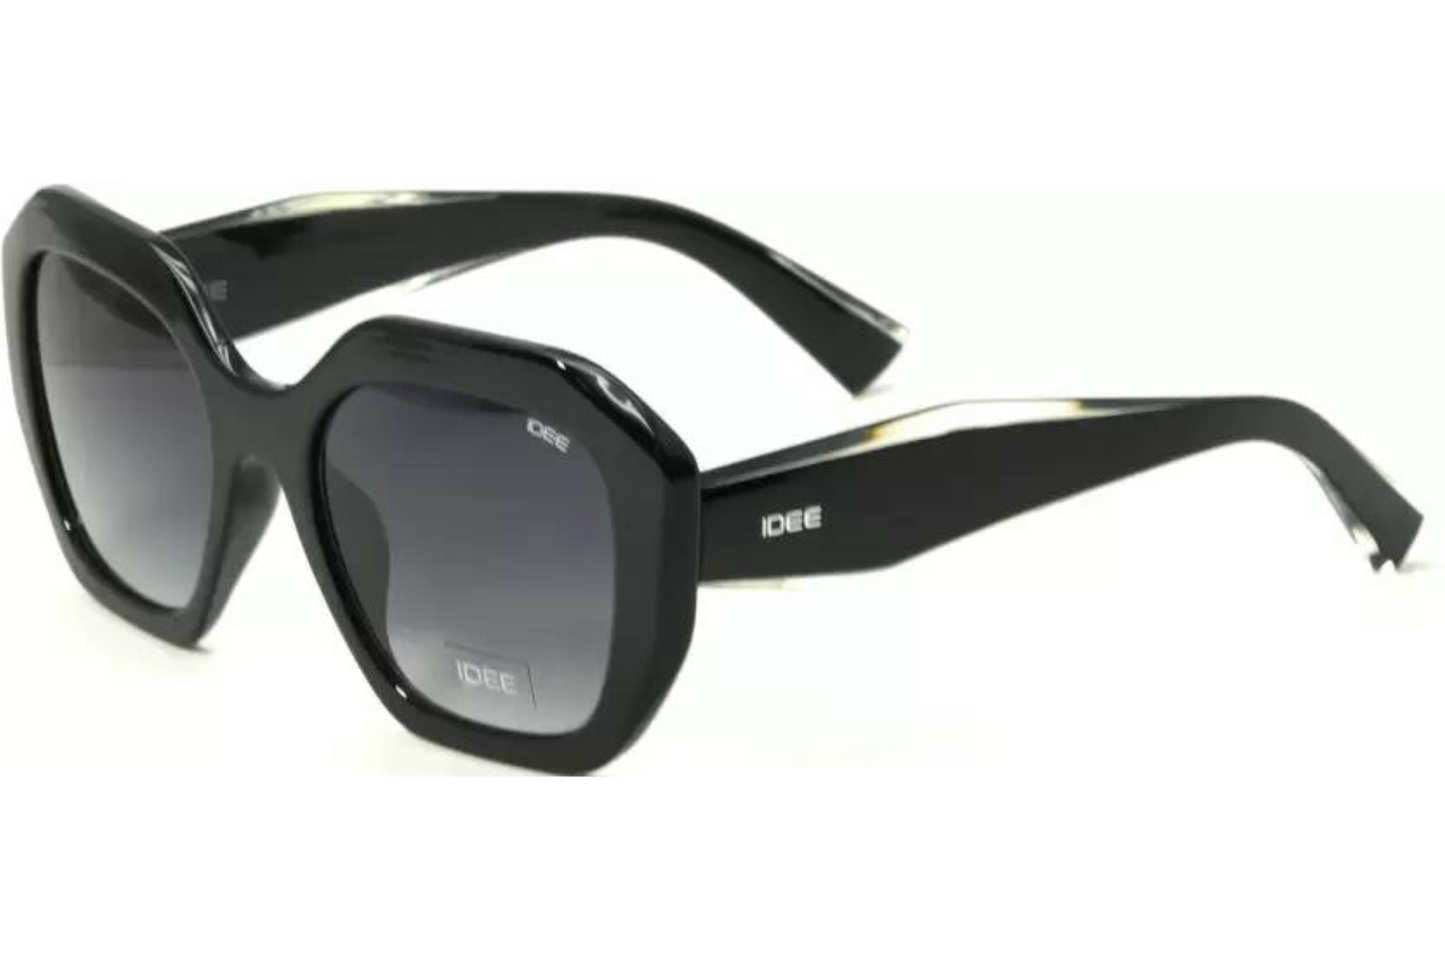 IDEE Sunglasses S2847